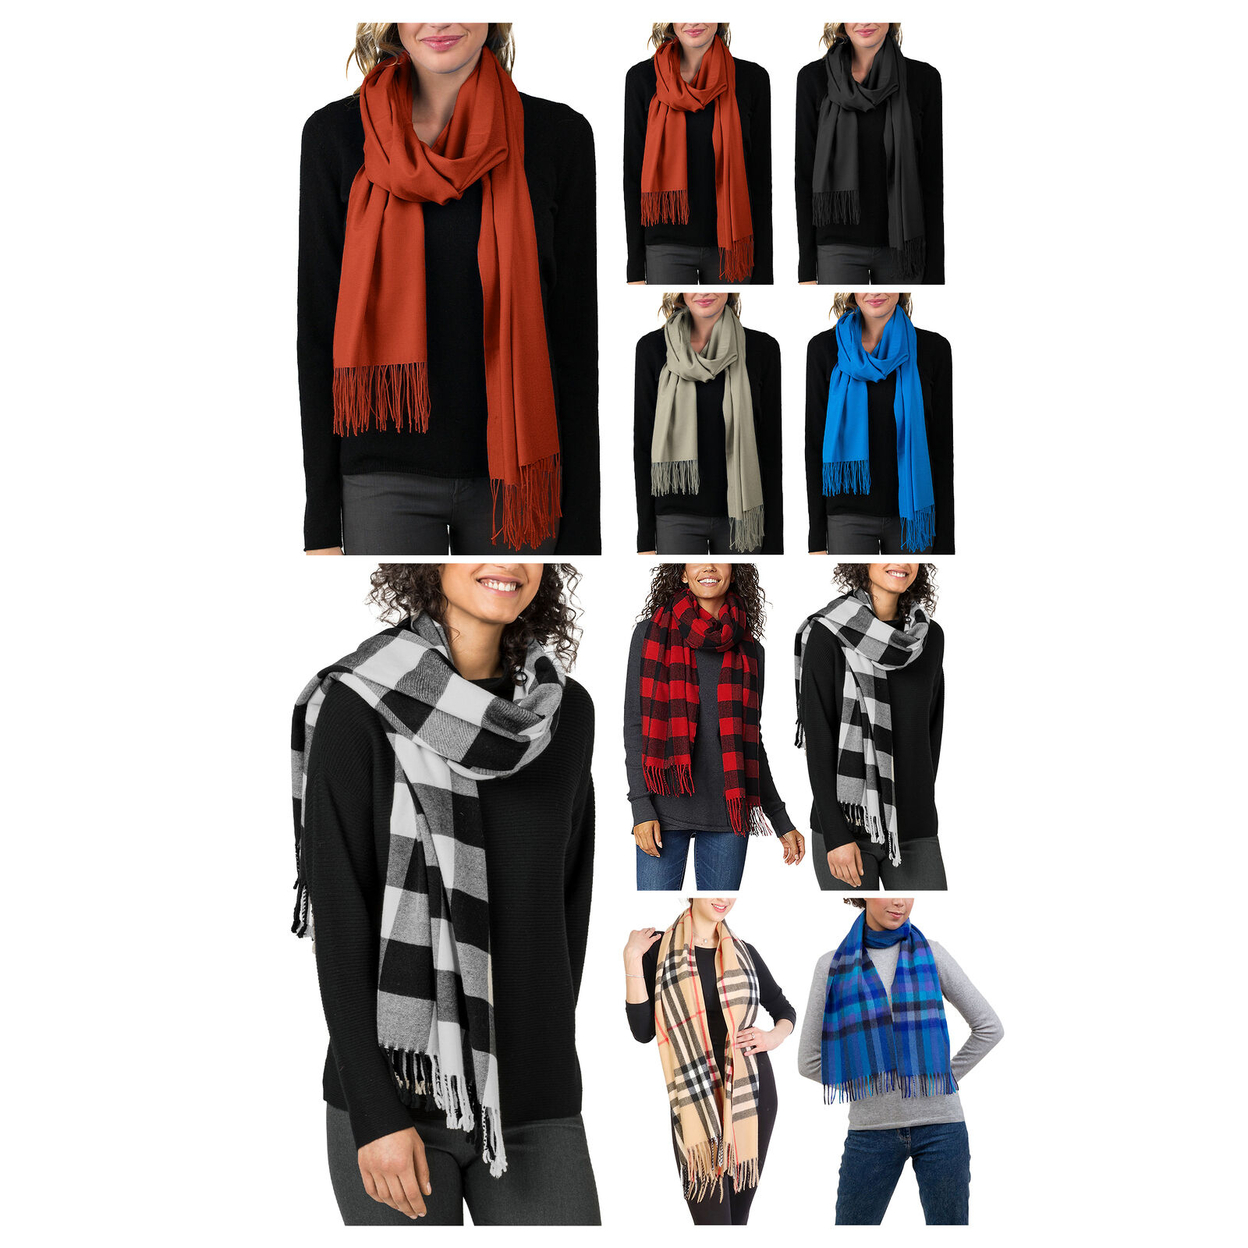 3-Pack: Women's Ultra Soft Neutral & Bright Cashmere Feel Winter Warm Scarfs - Bright